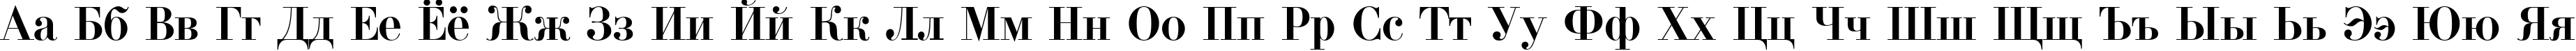 Пример написания русского алфавита шрифтом PG_Didona_Cyr illic